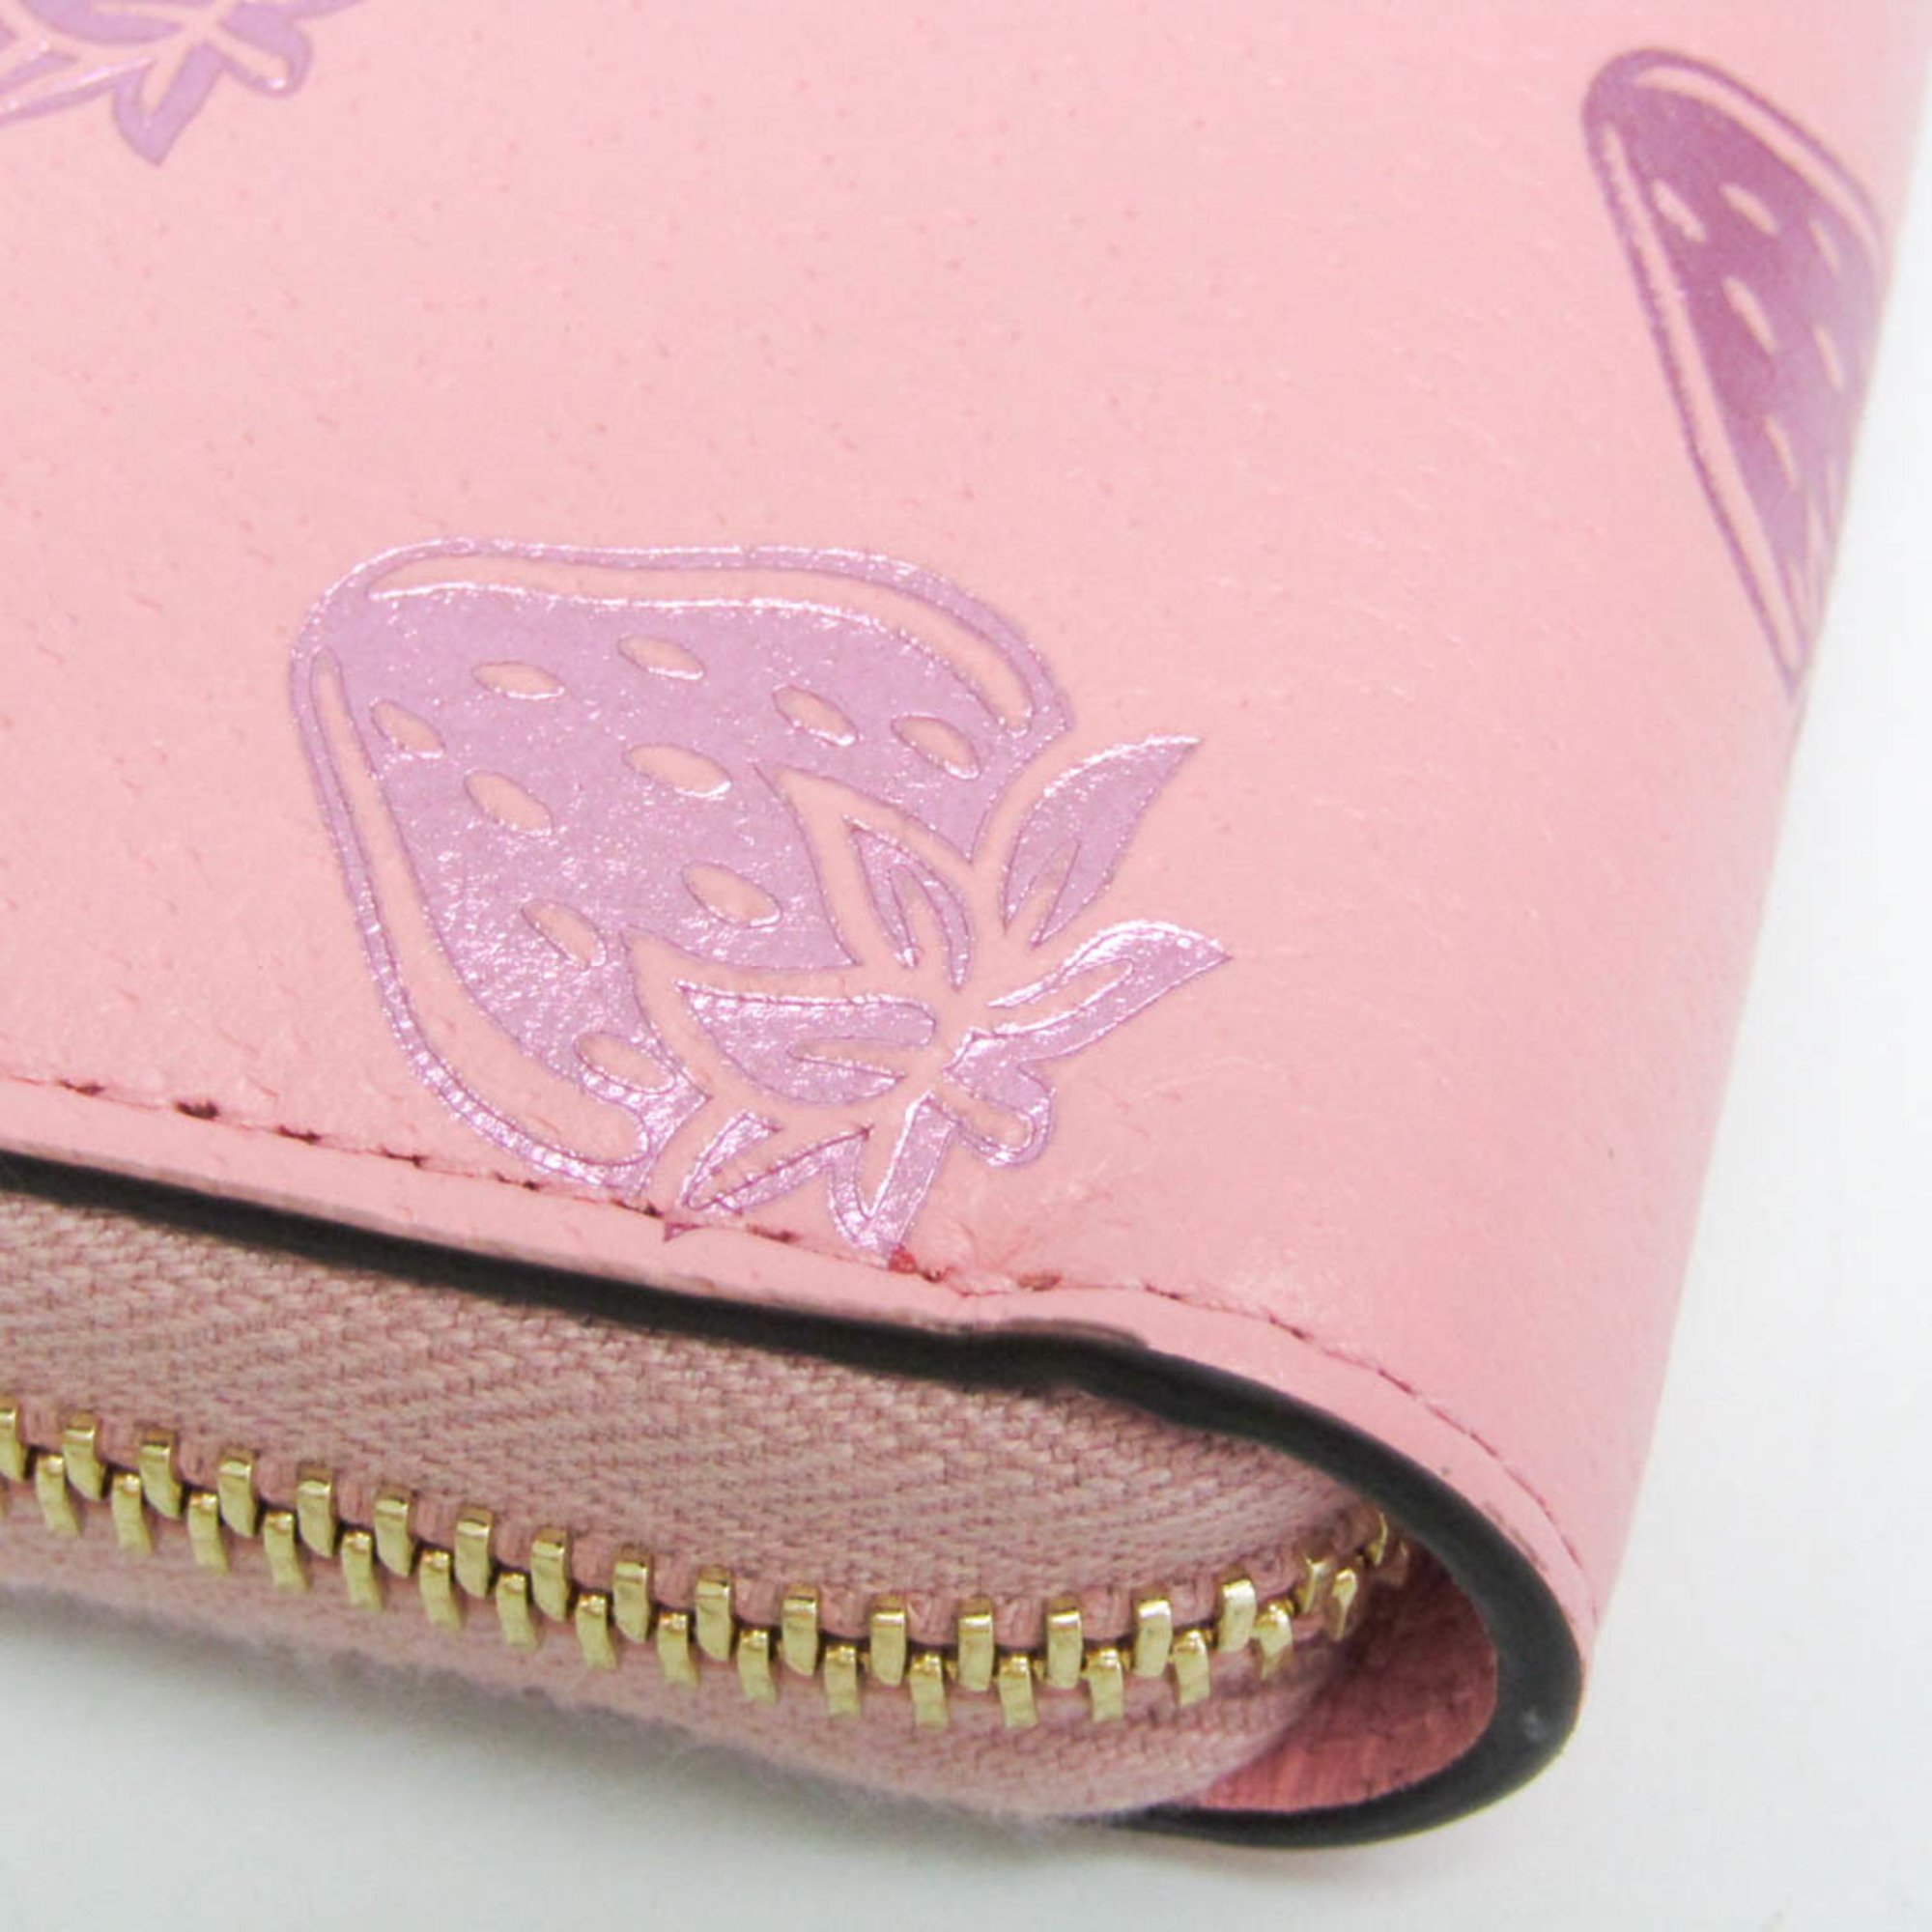 Gucci Valentines Day Cherry Strawberry Print 456117 Women's Leather Long Wallet (bi-fold) Light Pink,Purple